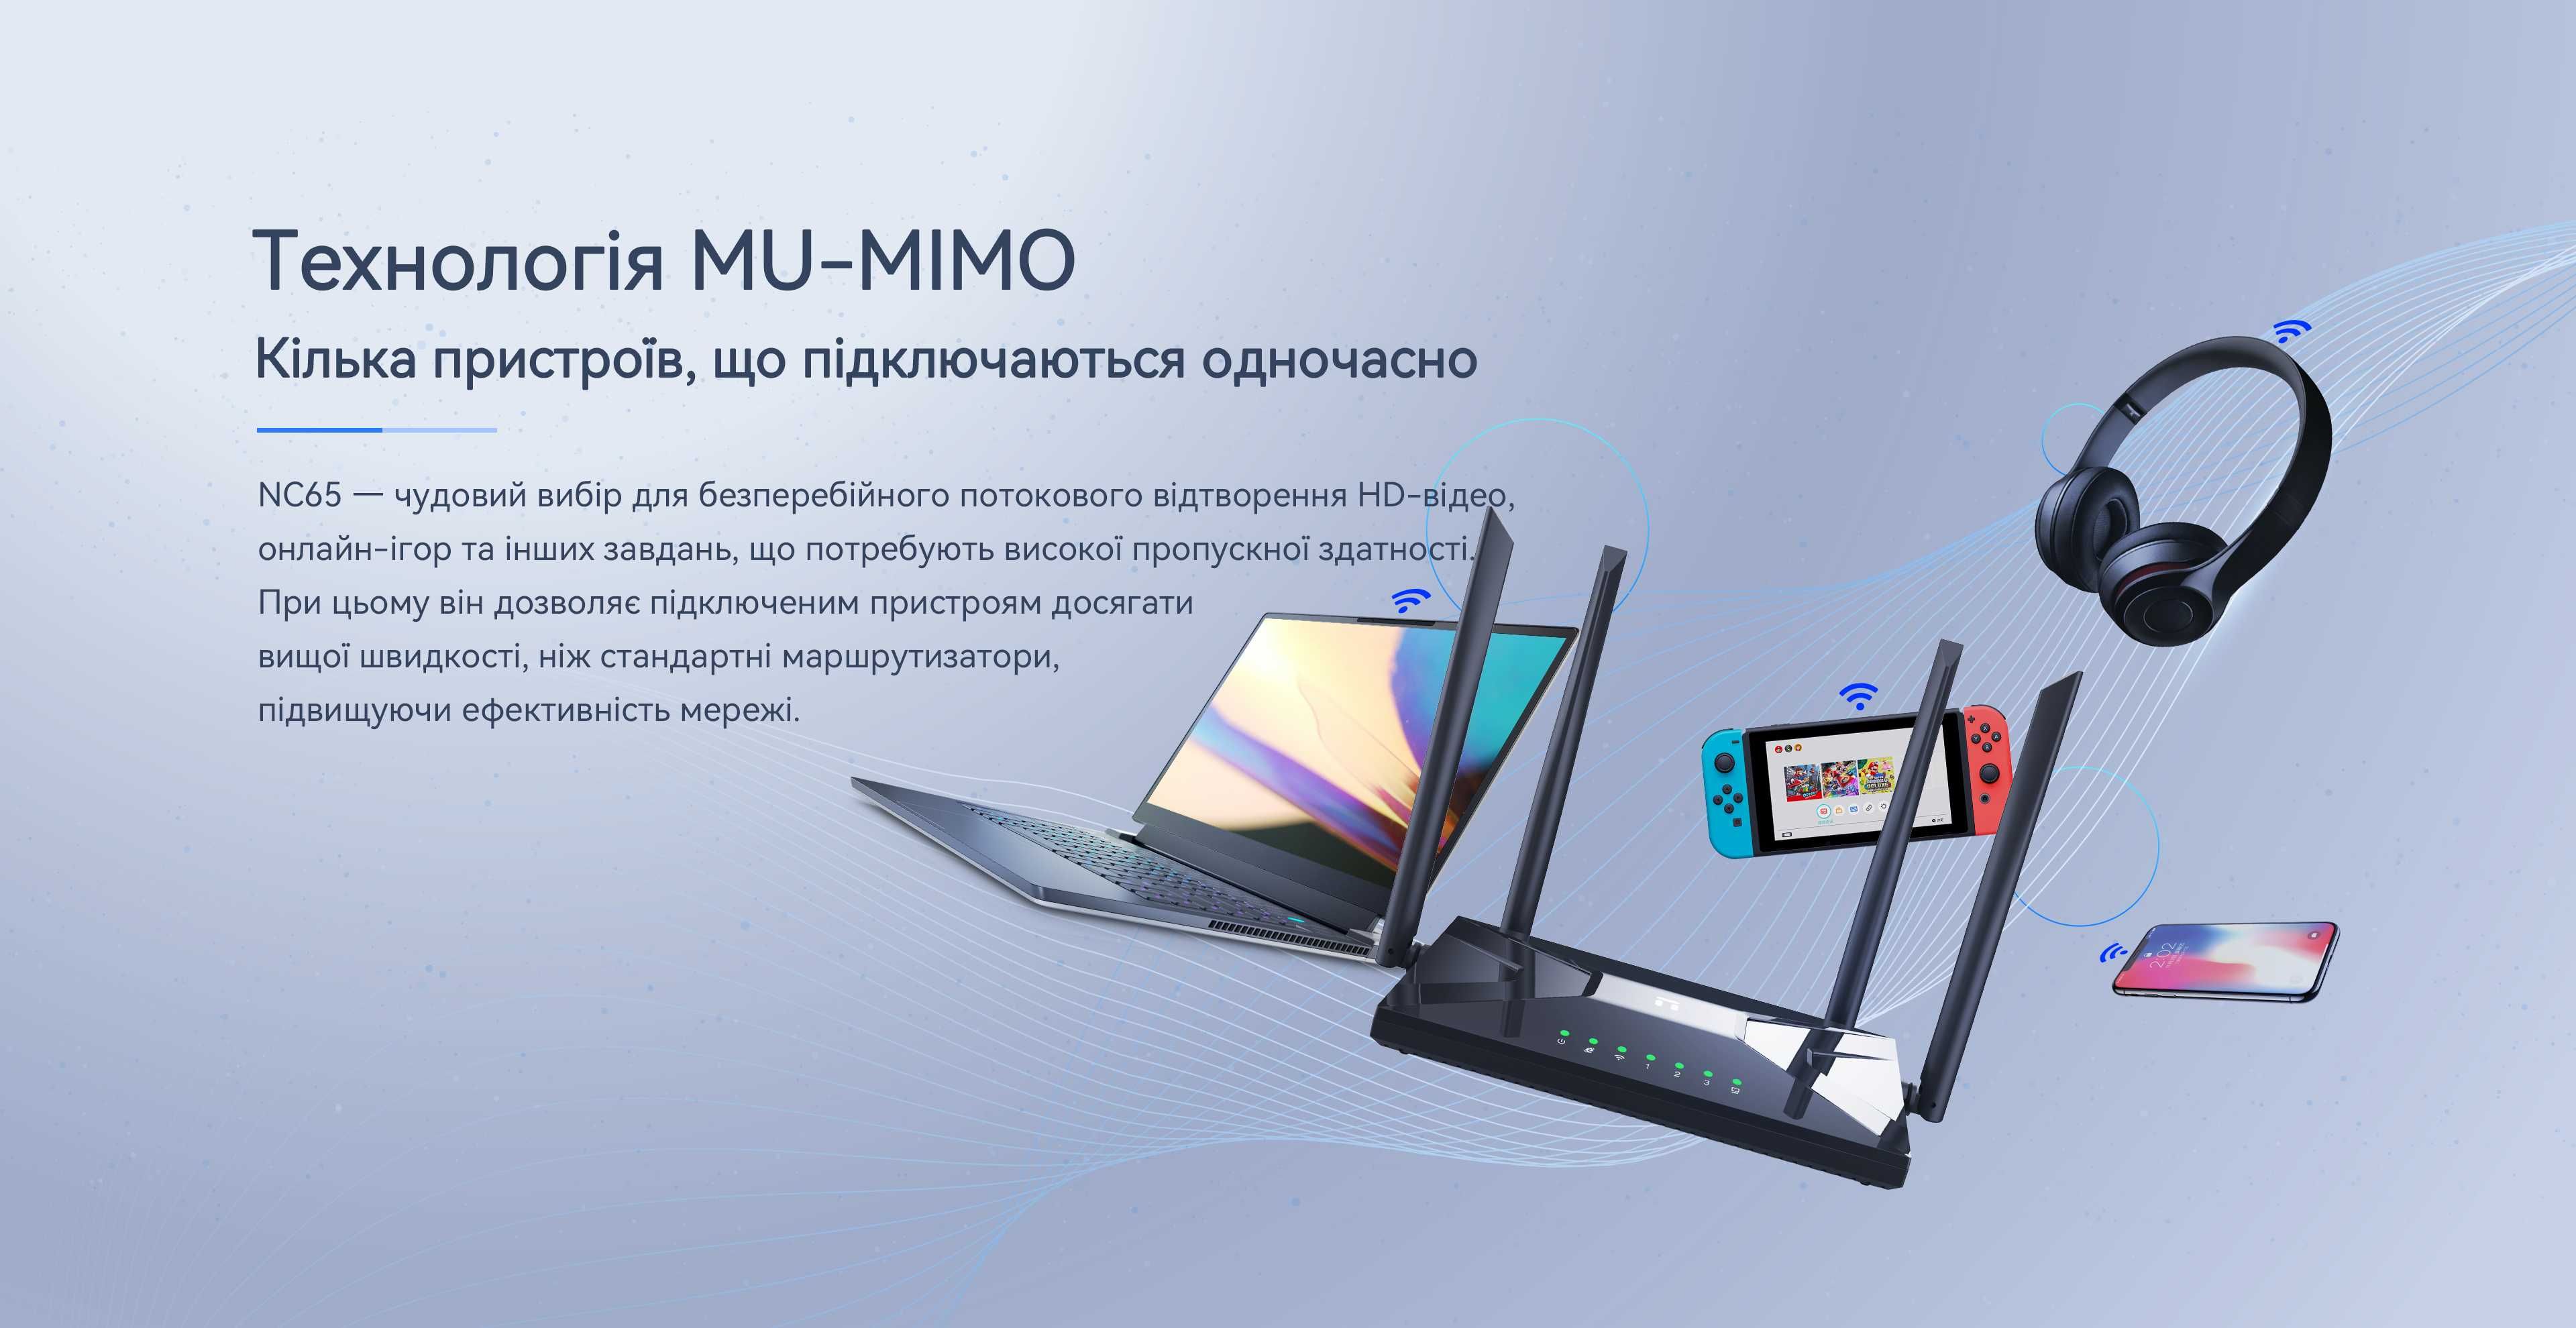 Новый Mesh WiFi Гигабитный 5 ГГц Роутер Netis NC65 AC1200 Mu-Mimo